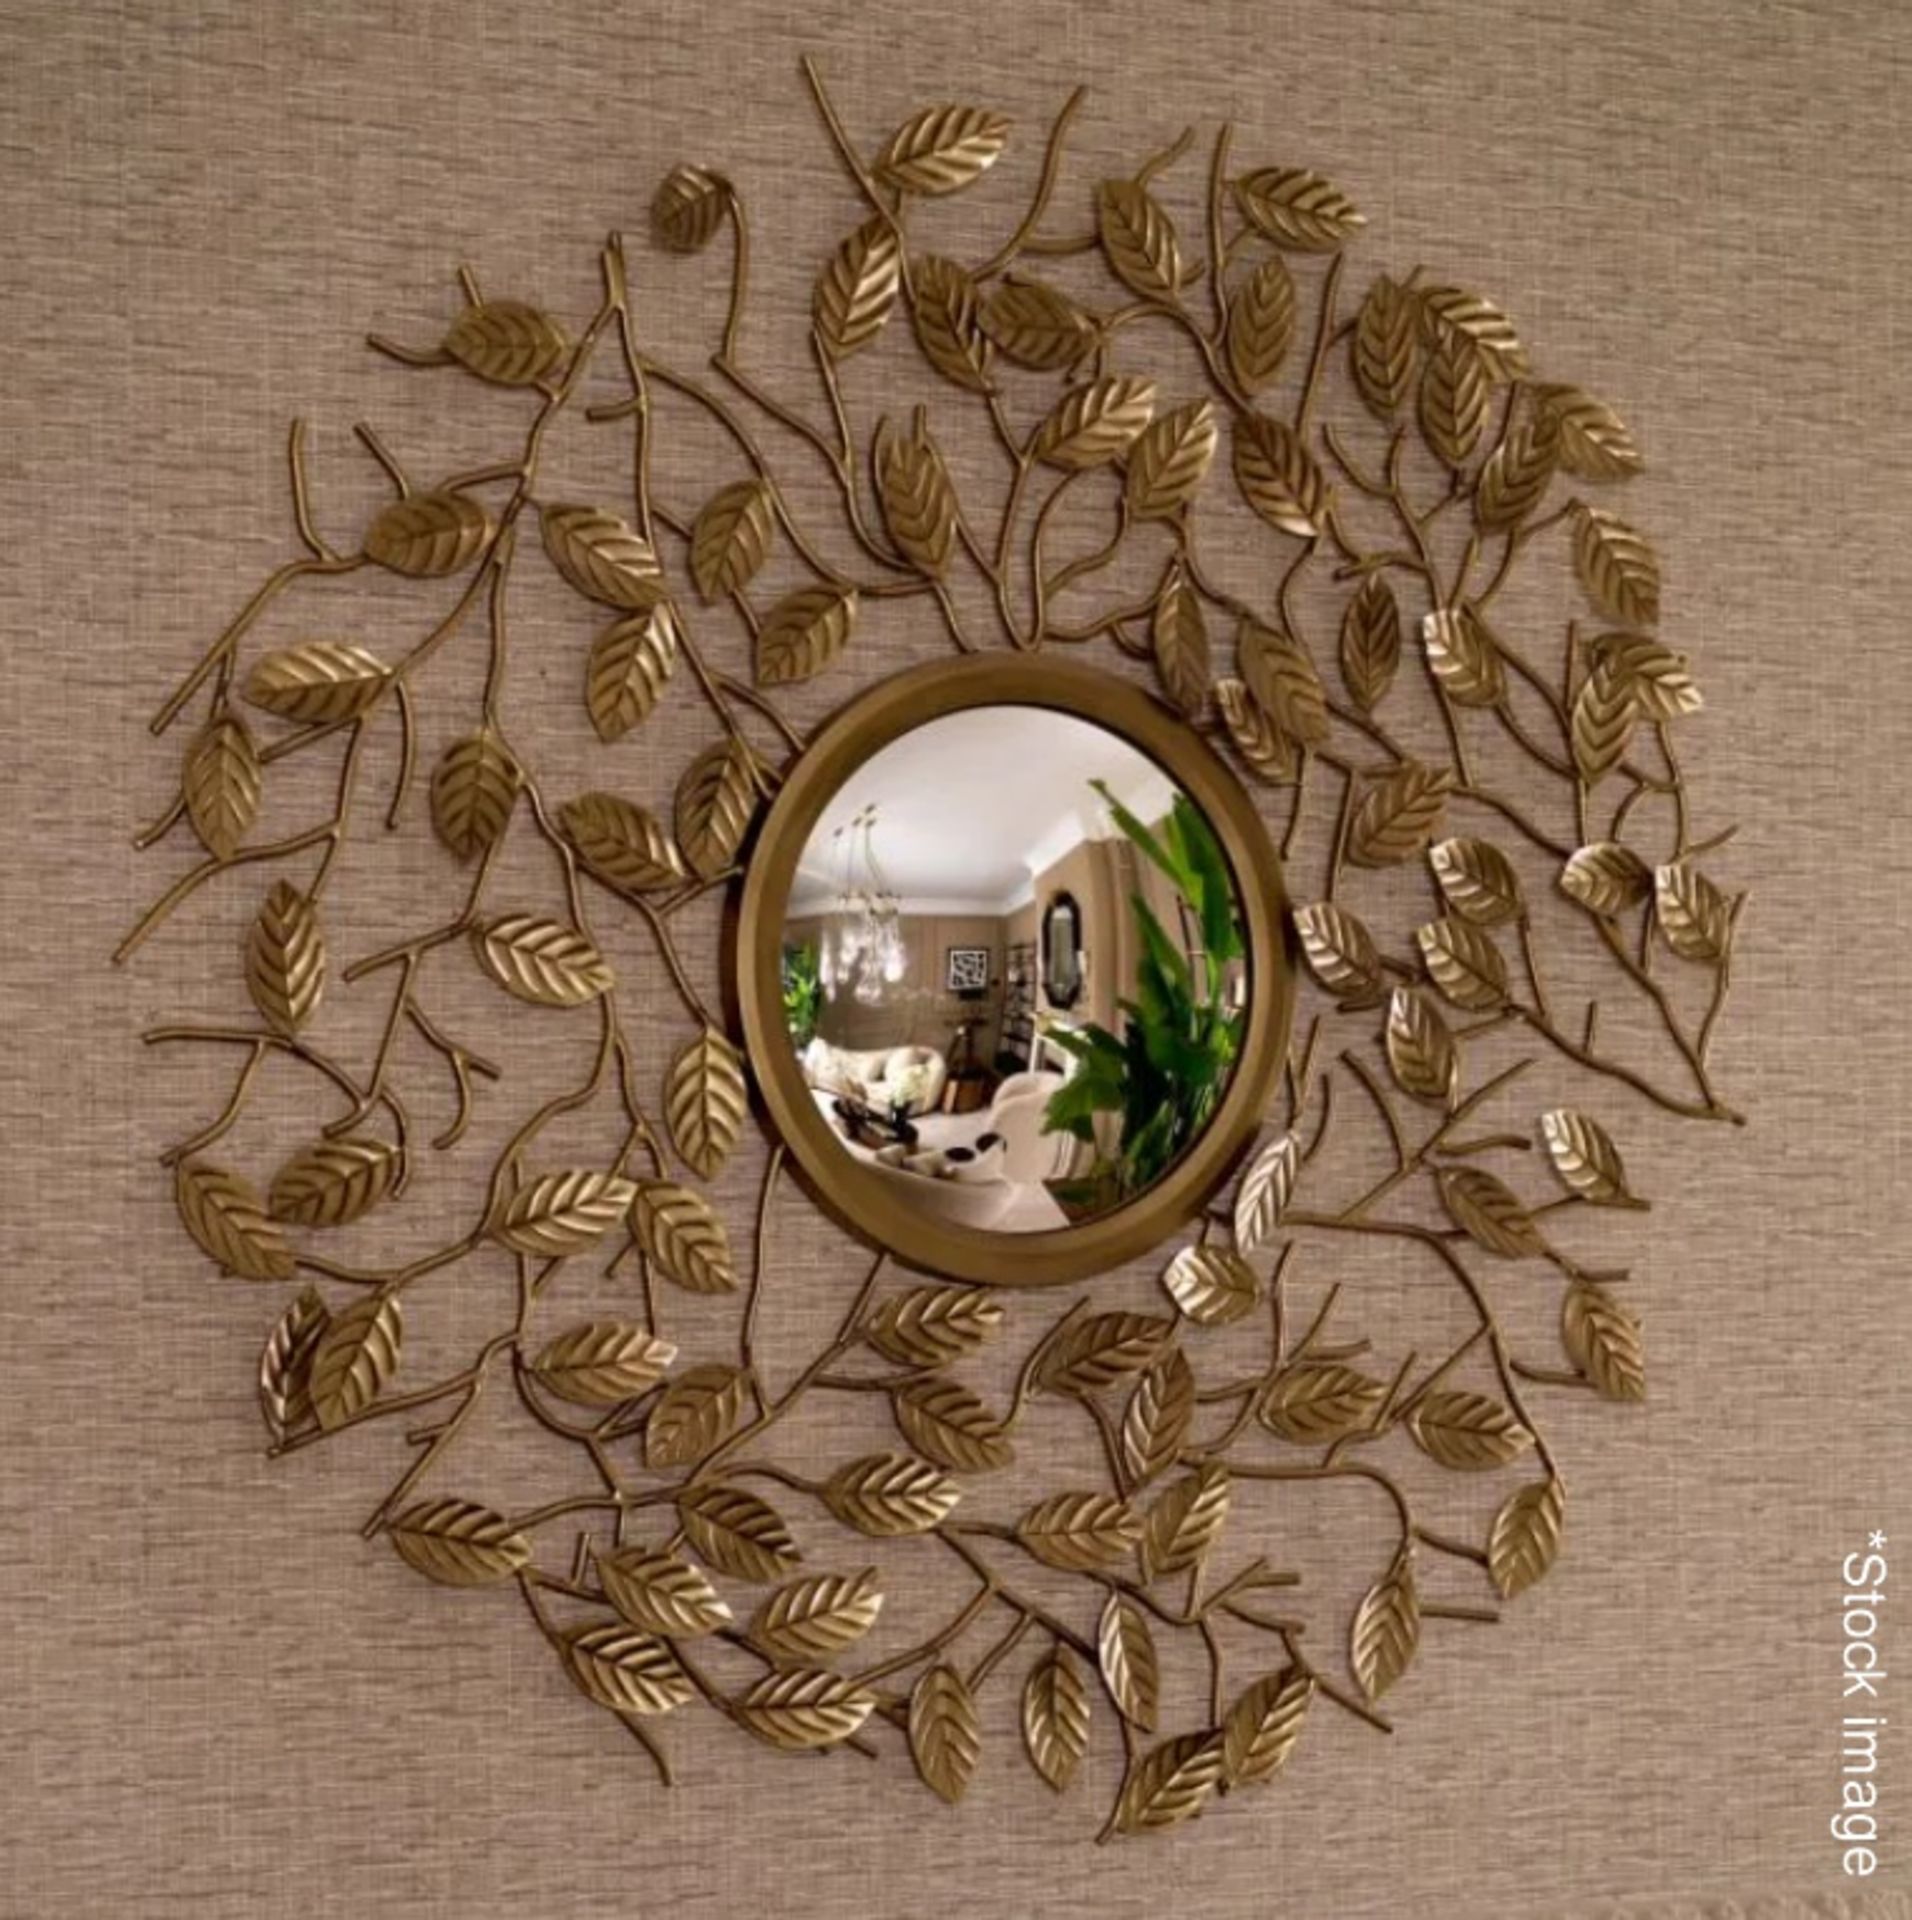 1 x EICHHOLTZ 'Fiona' Large Opulent Decorative Mirror Wall Art - RRP £1,195 *Read Full Description* - Image 2 of 12